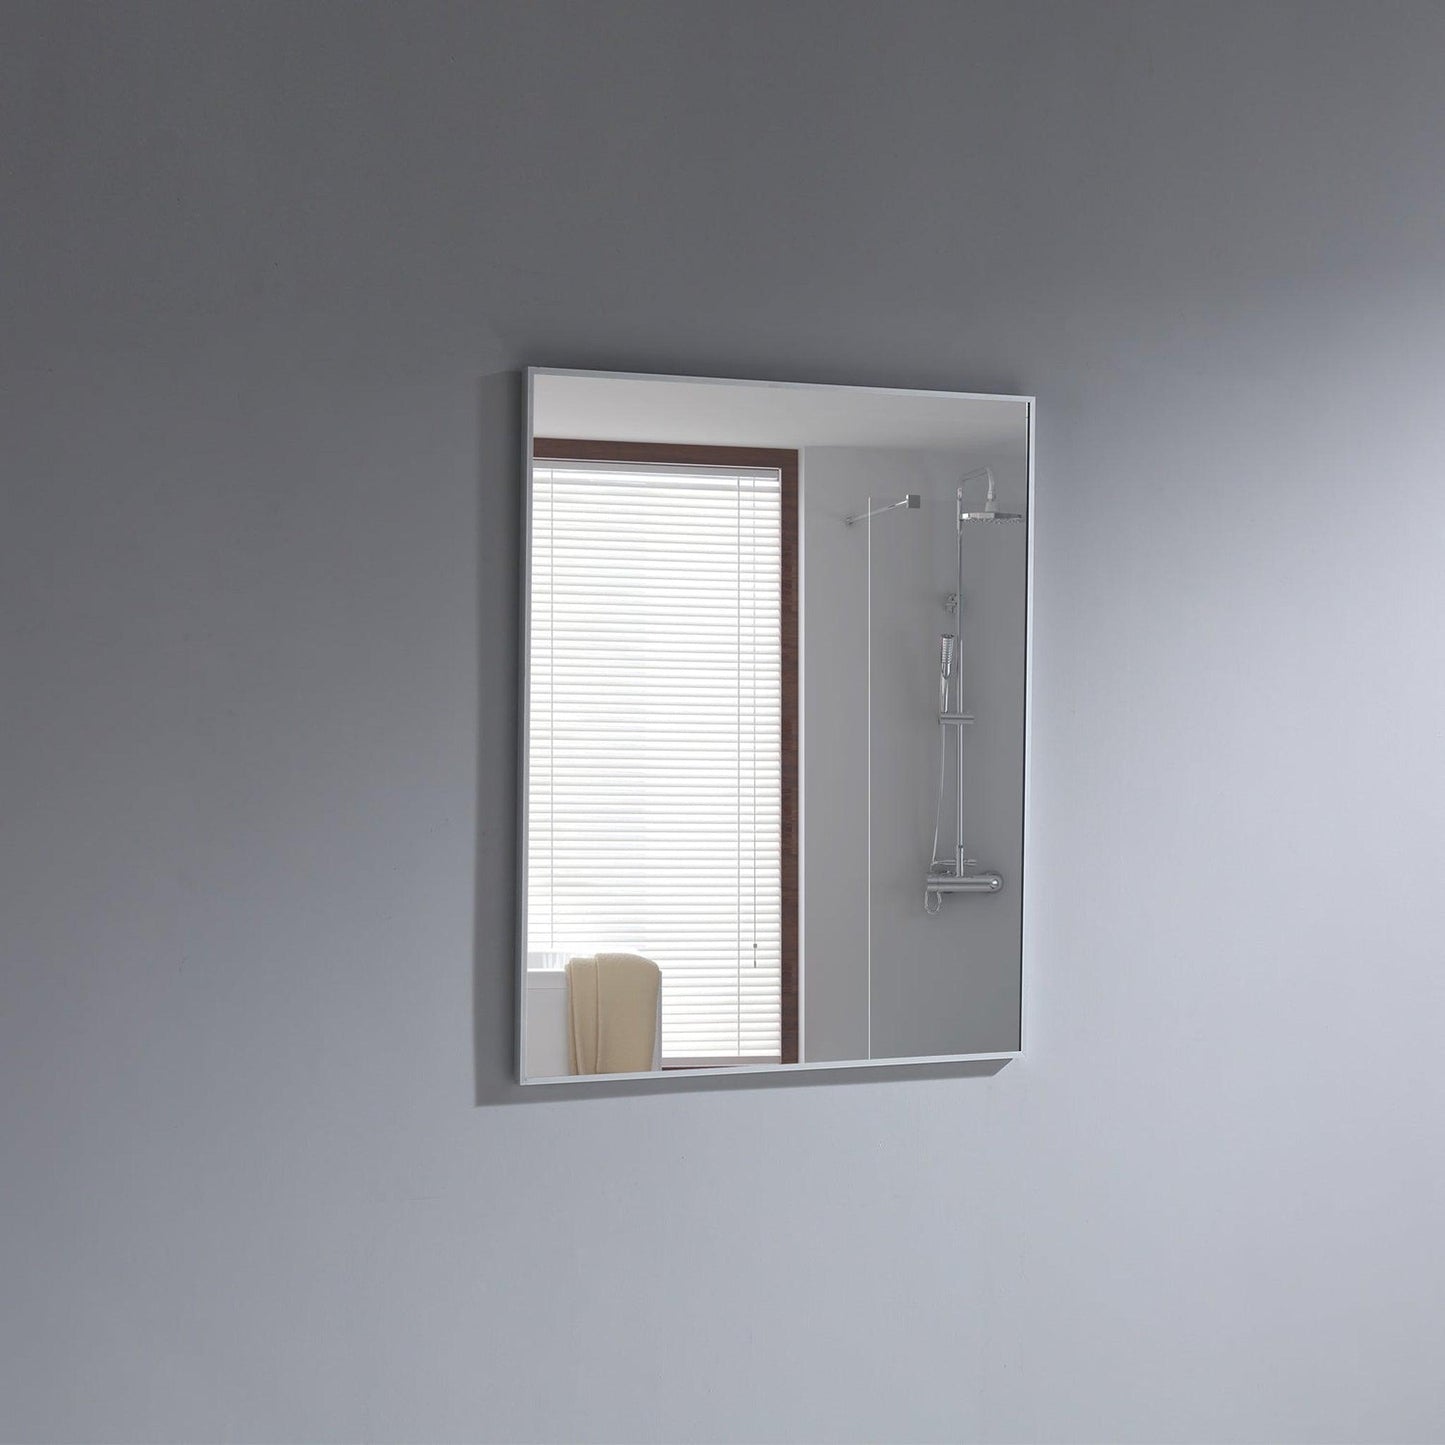 Eviva Sax 24" x 30" Polished Chrome Framed Bathroom Wall-Mounted Mirror